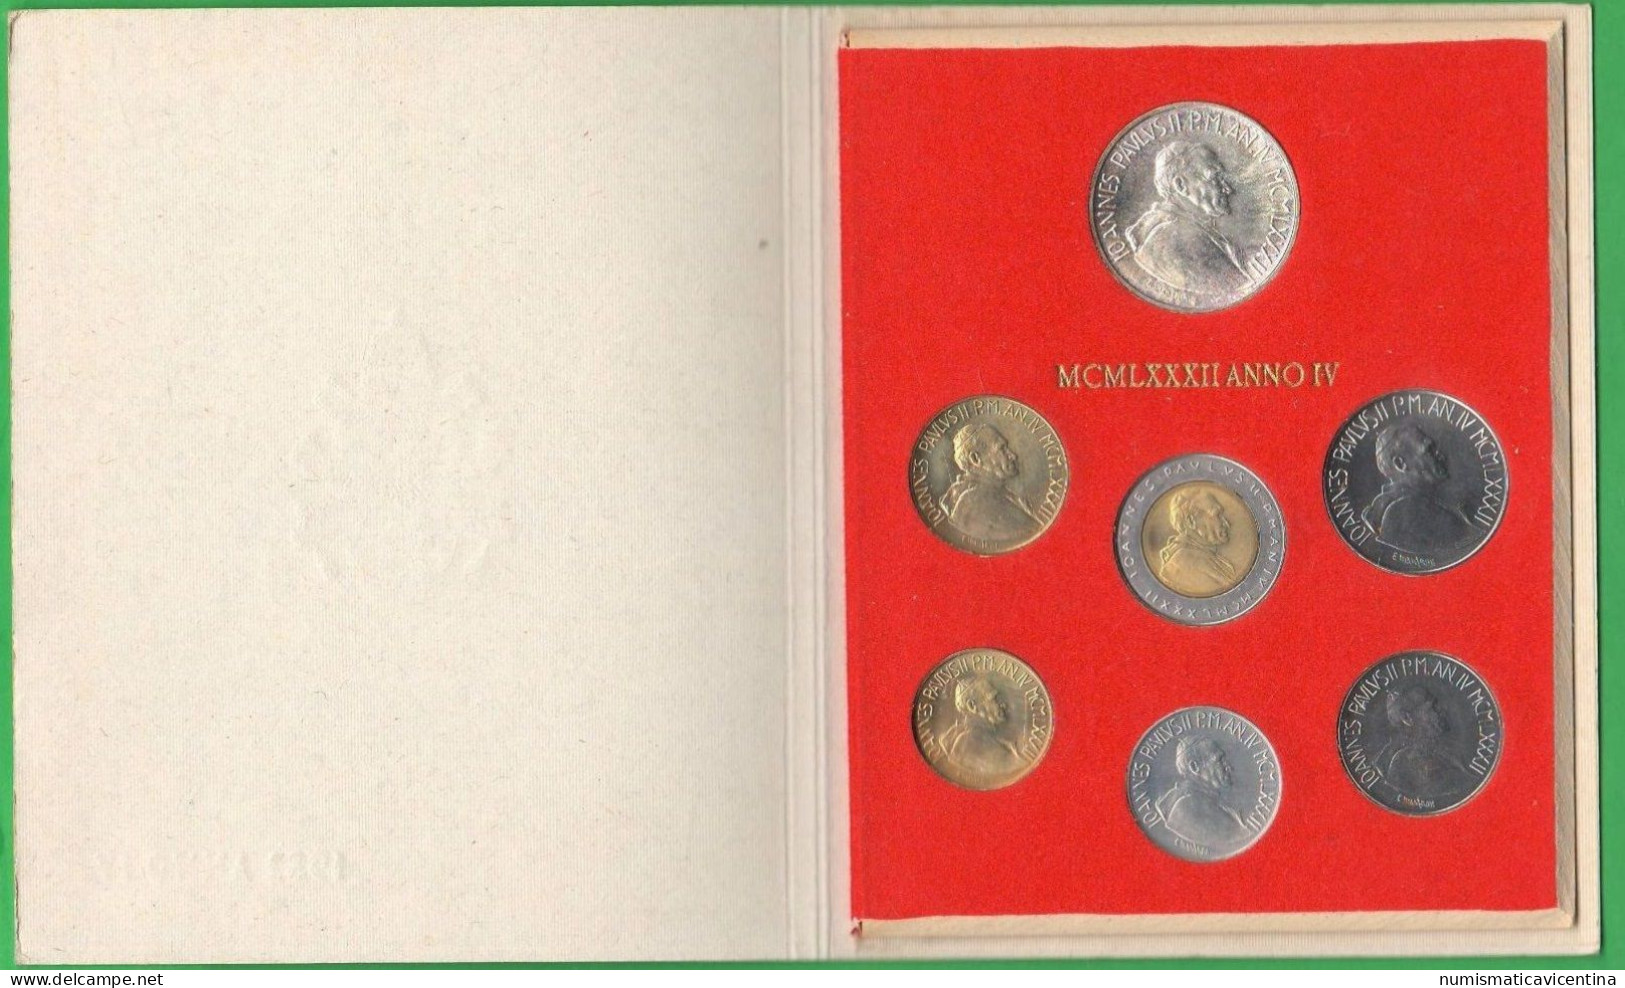 Vaticano Serie 1982 Wojtyla Vatikan City Anno IV° UNC Divisionale 7 Valori Set Coin Papal City - Vatikan